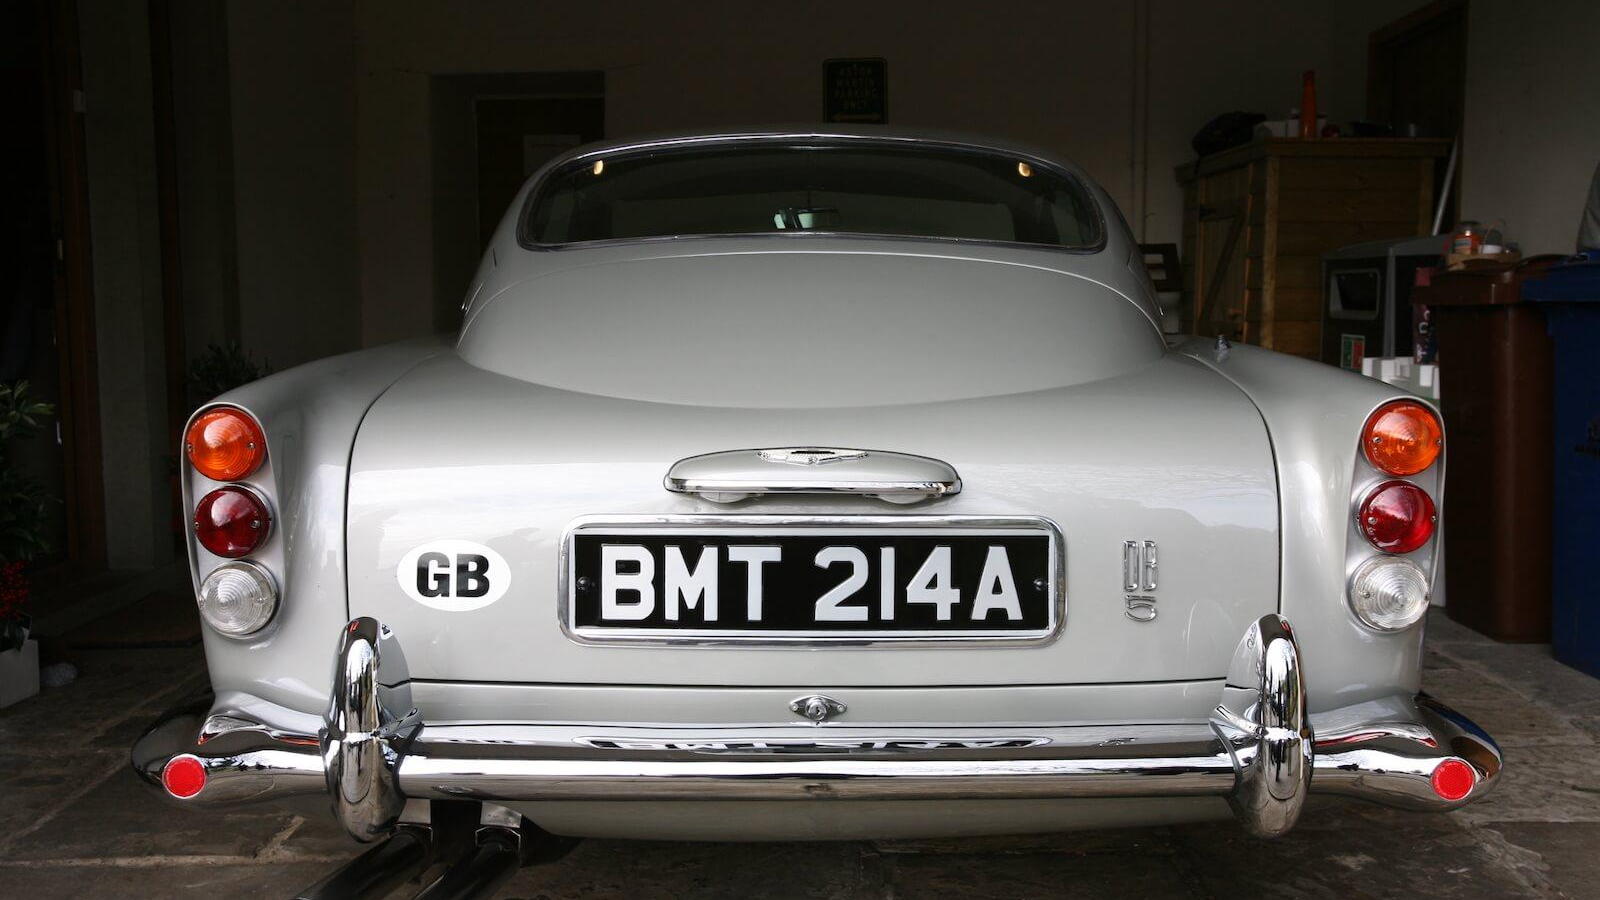 James Bond Aston Martin DB5 for sale